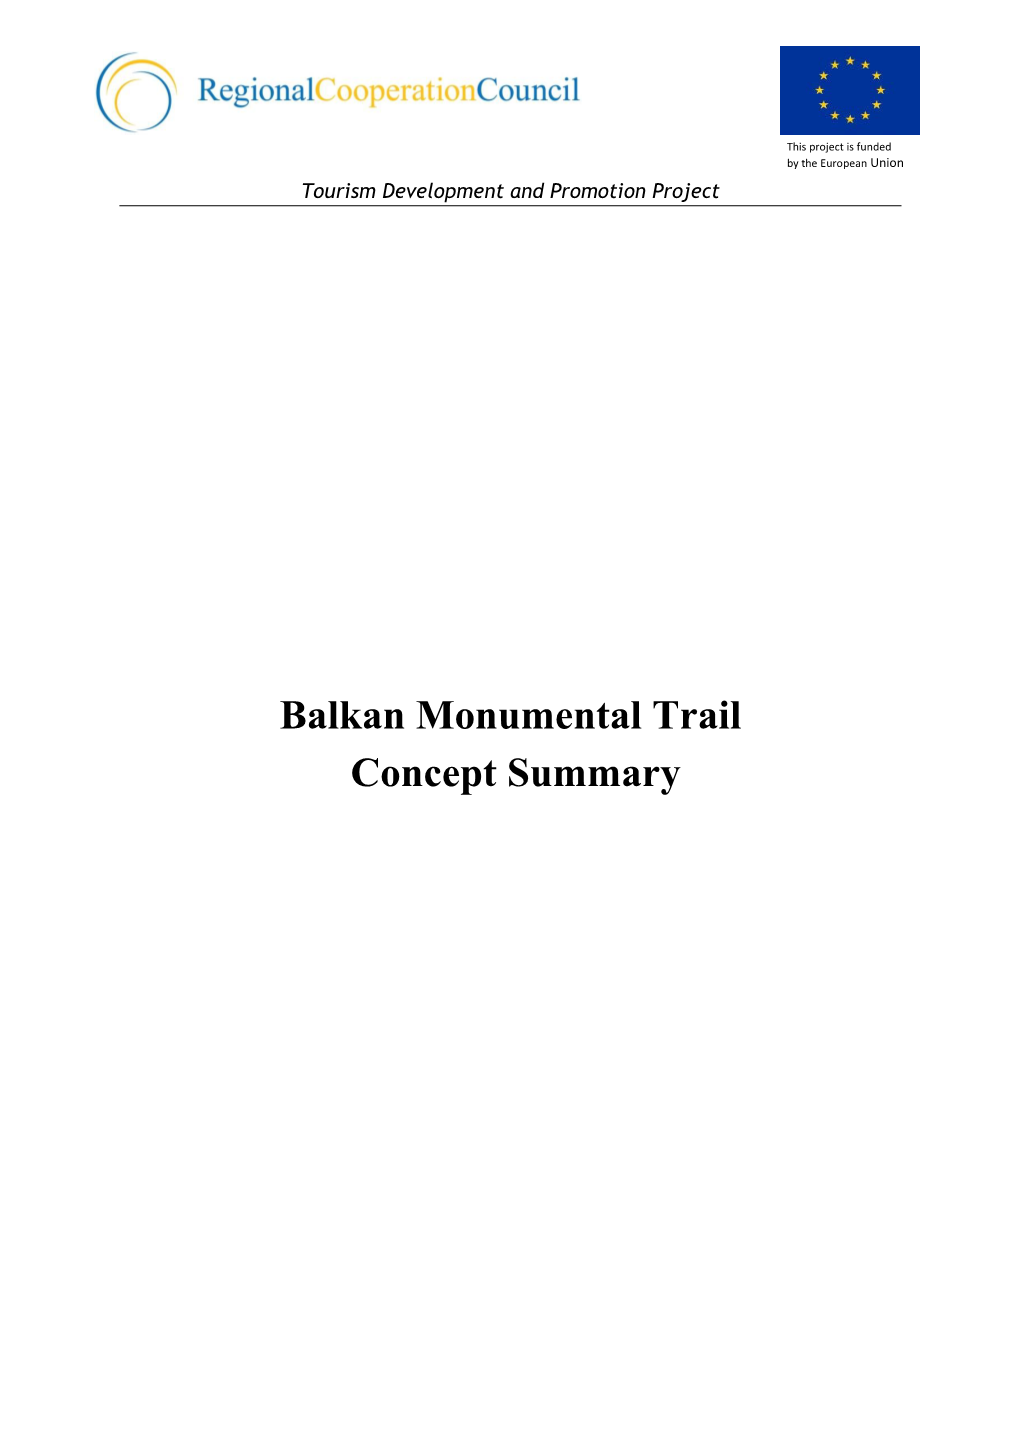 Balkan Monumental Trail Concept Summary